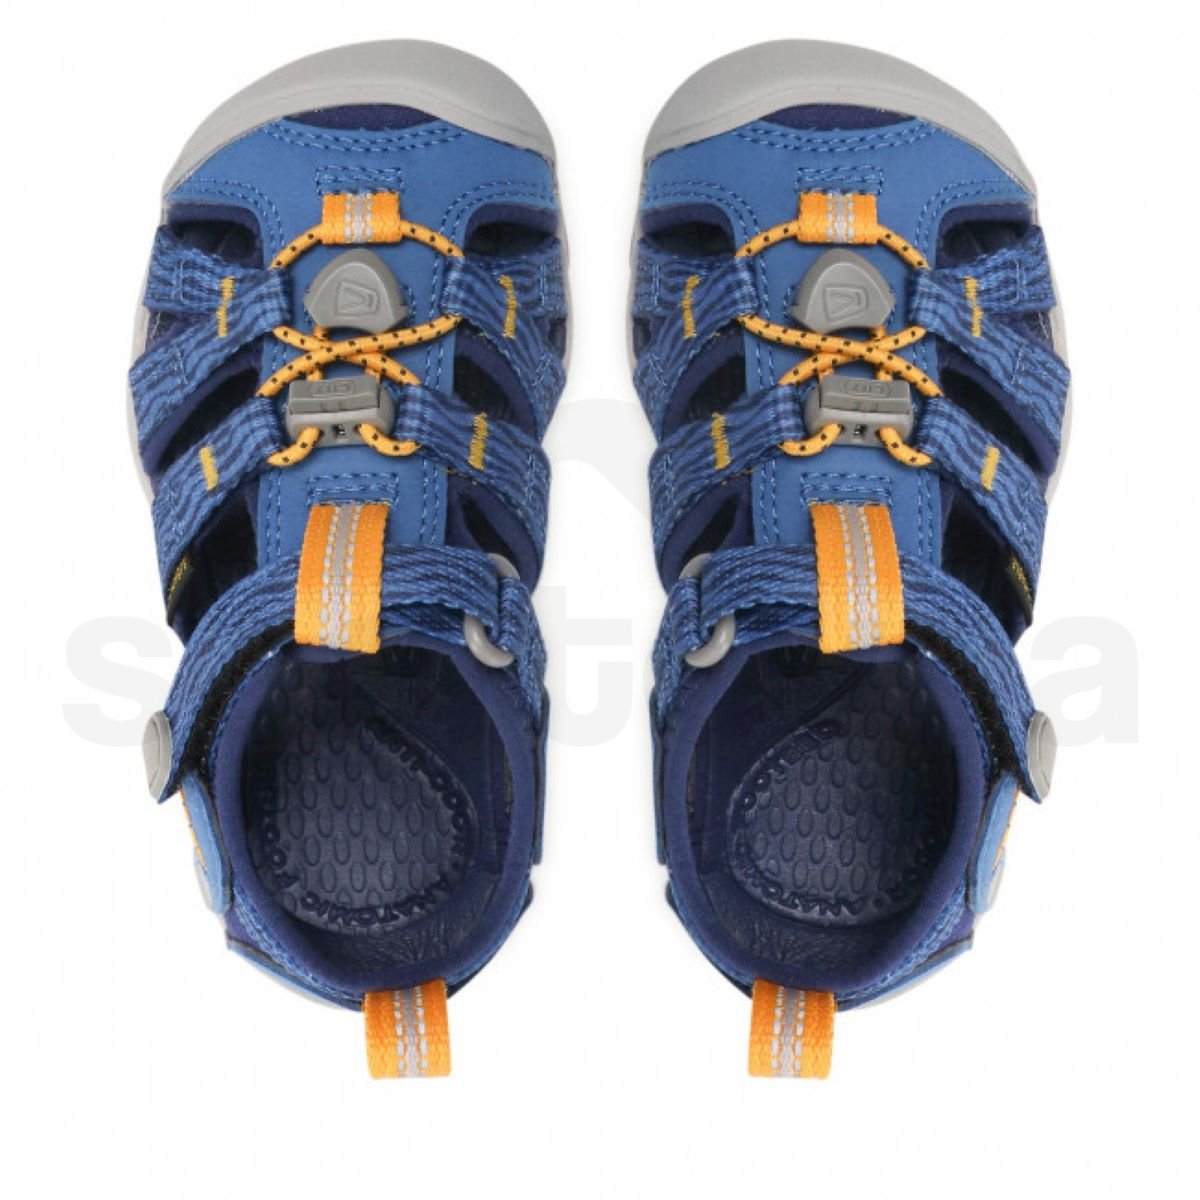 Obuv - sandály Keen Seacamp II CNX K - modrá/oranžová